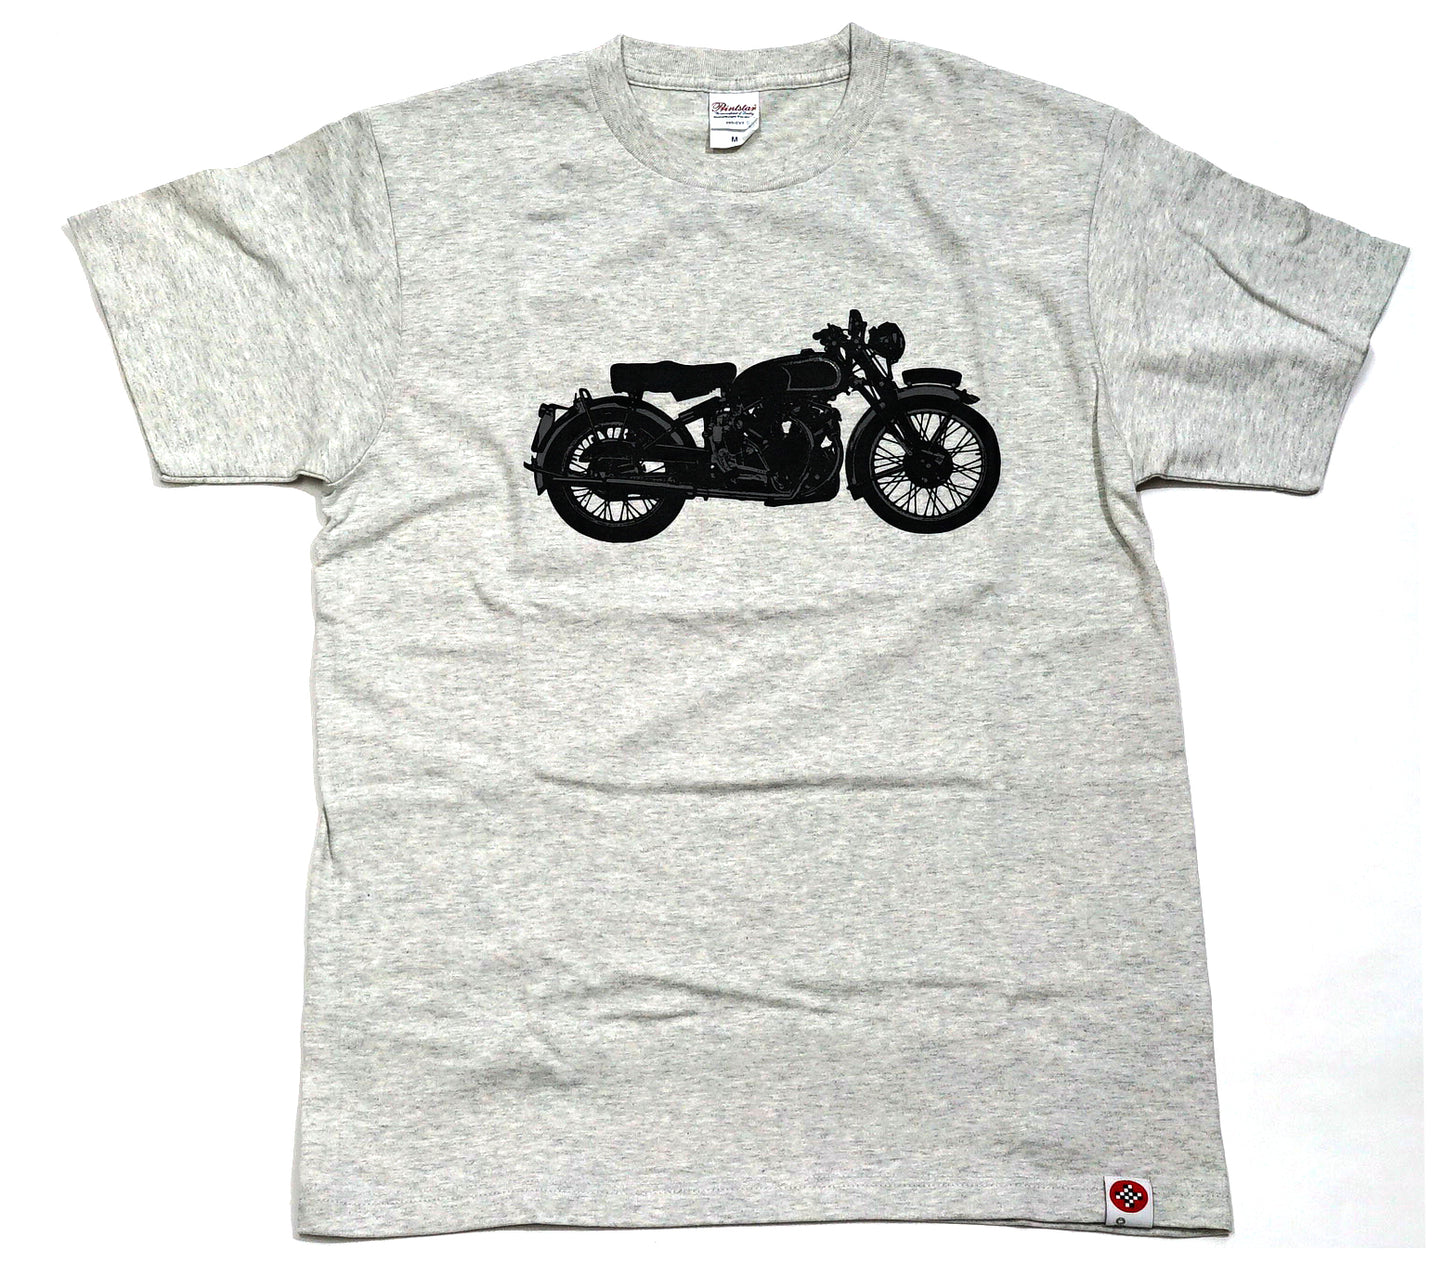 Reflector + Monochrome Bike Print T-shirt